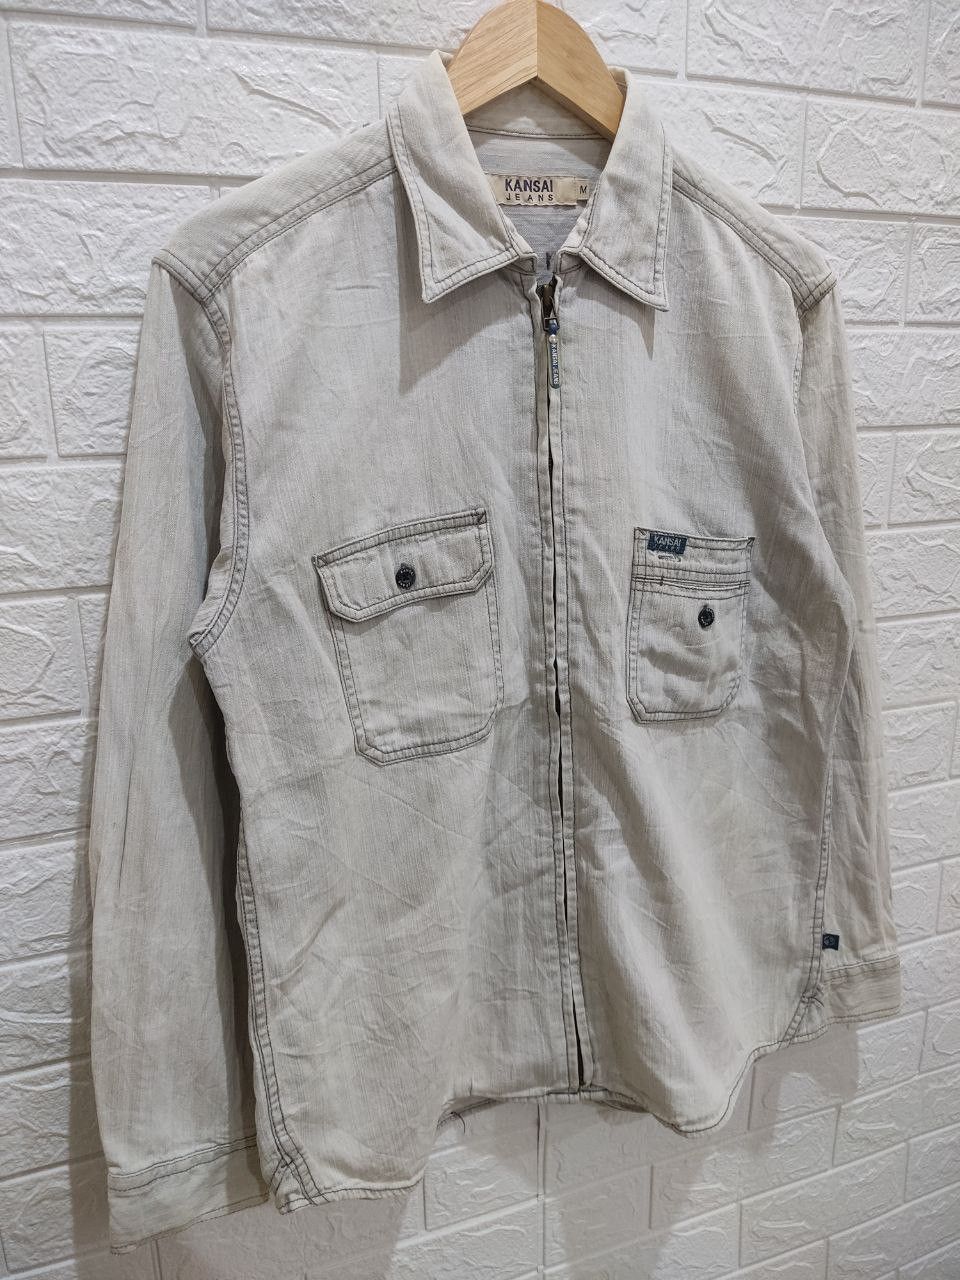 Vintage Kansai Jeans by Kansai Yamamoto Denim Zipper Jacket - 4